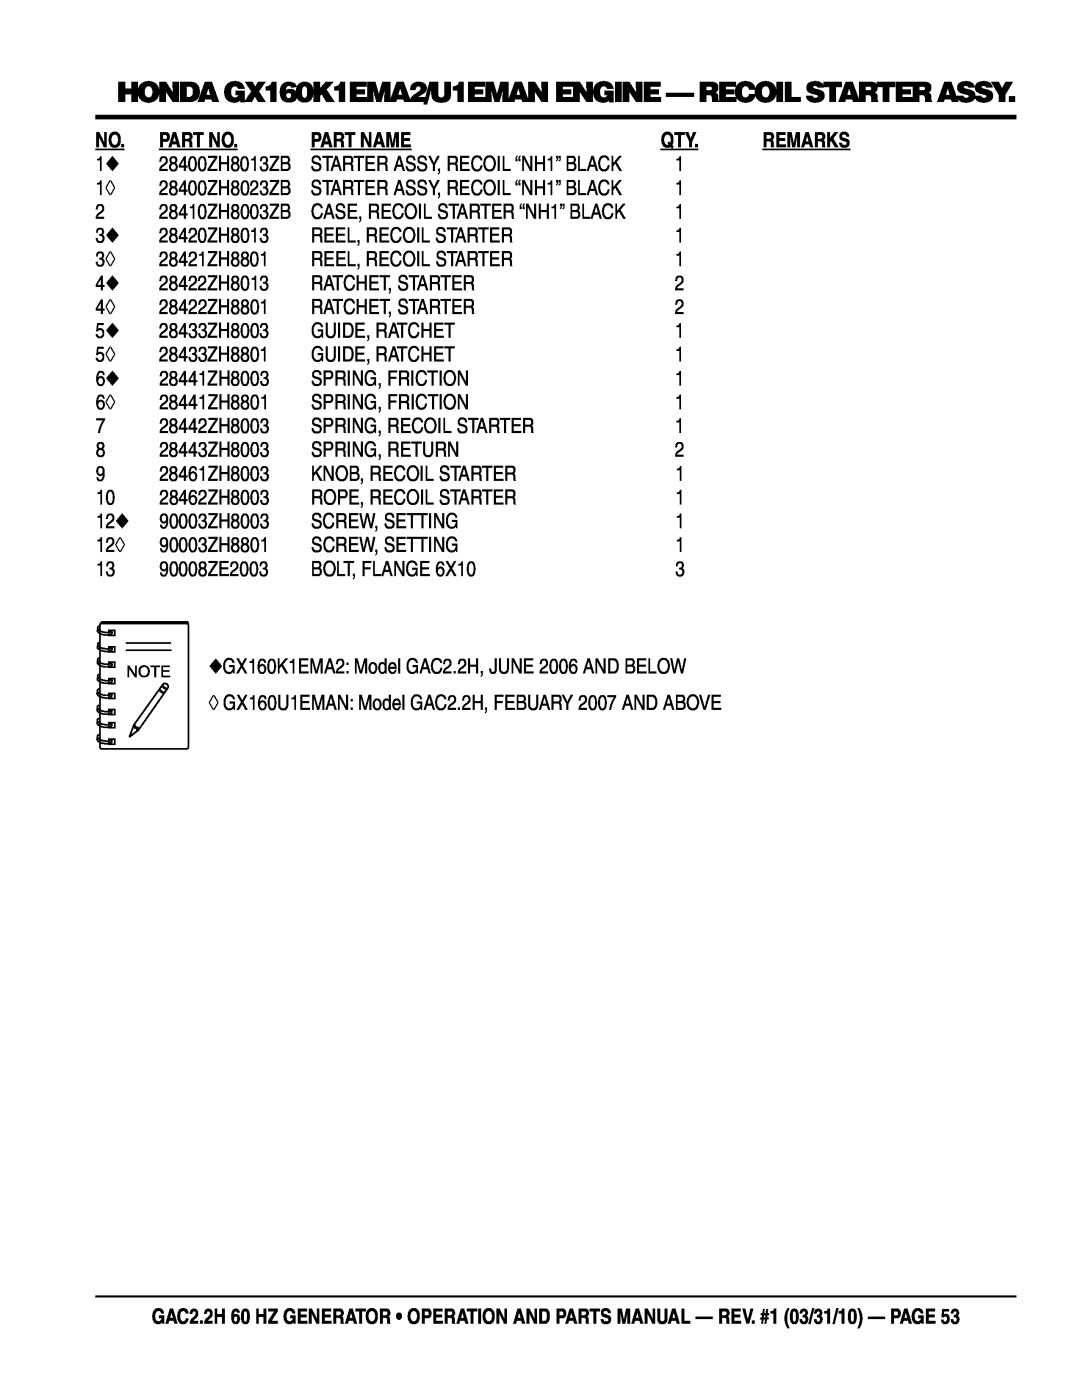 Multiquip GAC2.2H manual Part Name, 28420ZH8013 